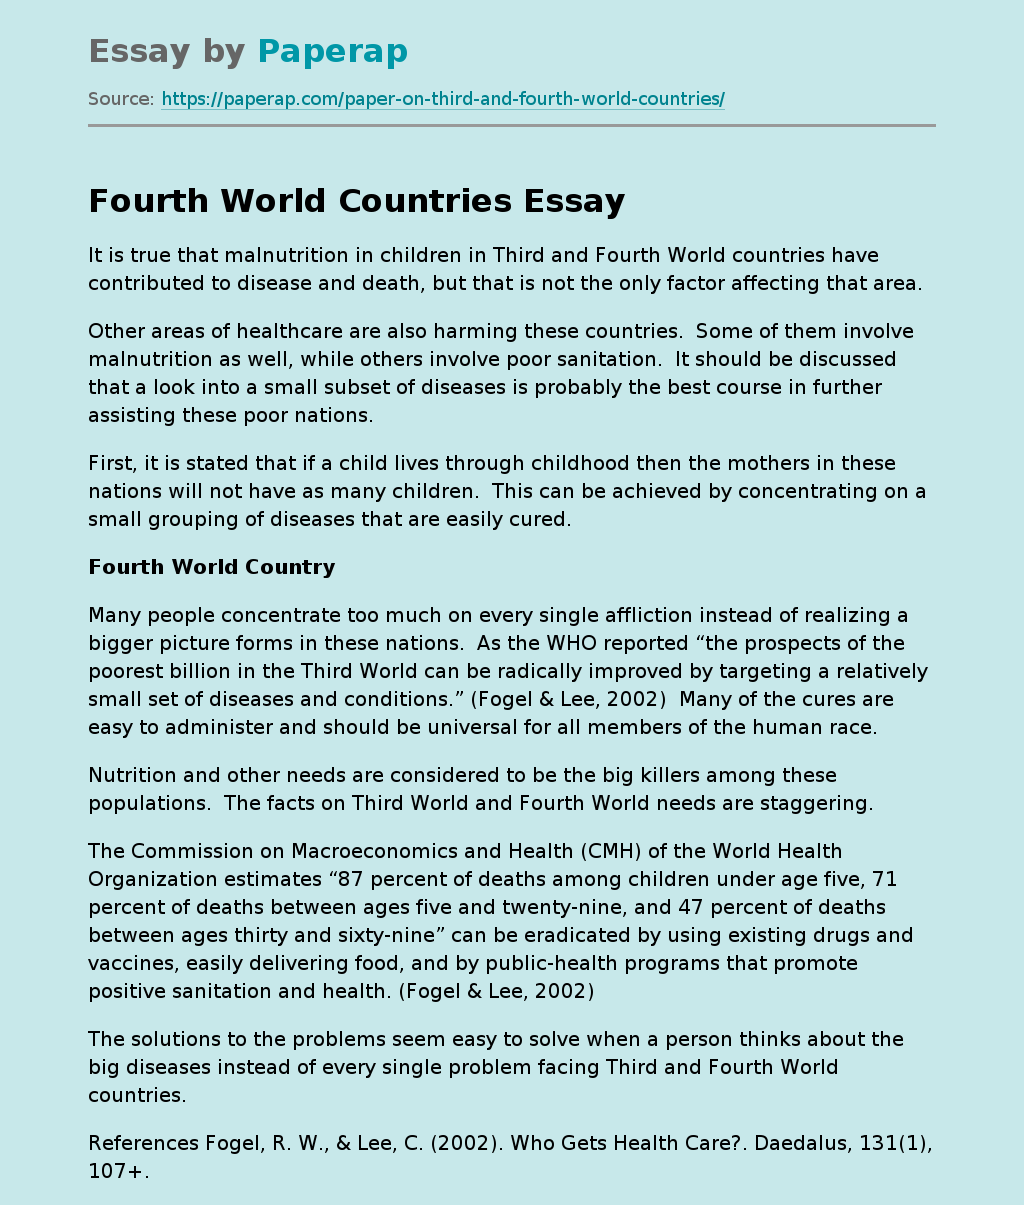 Fourth World Countries